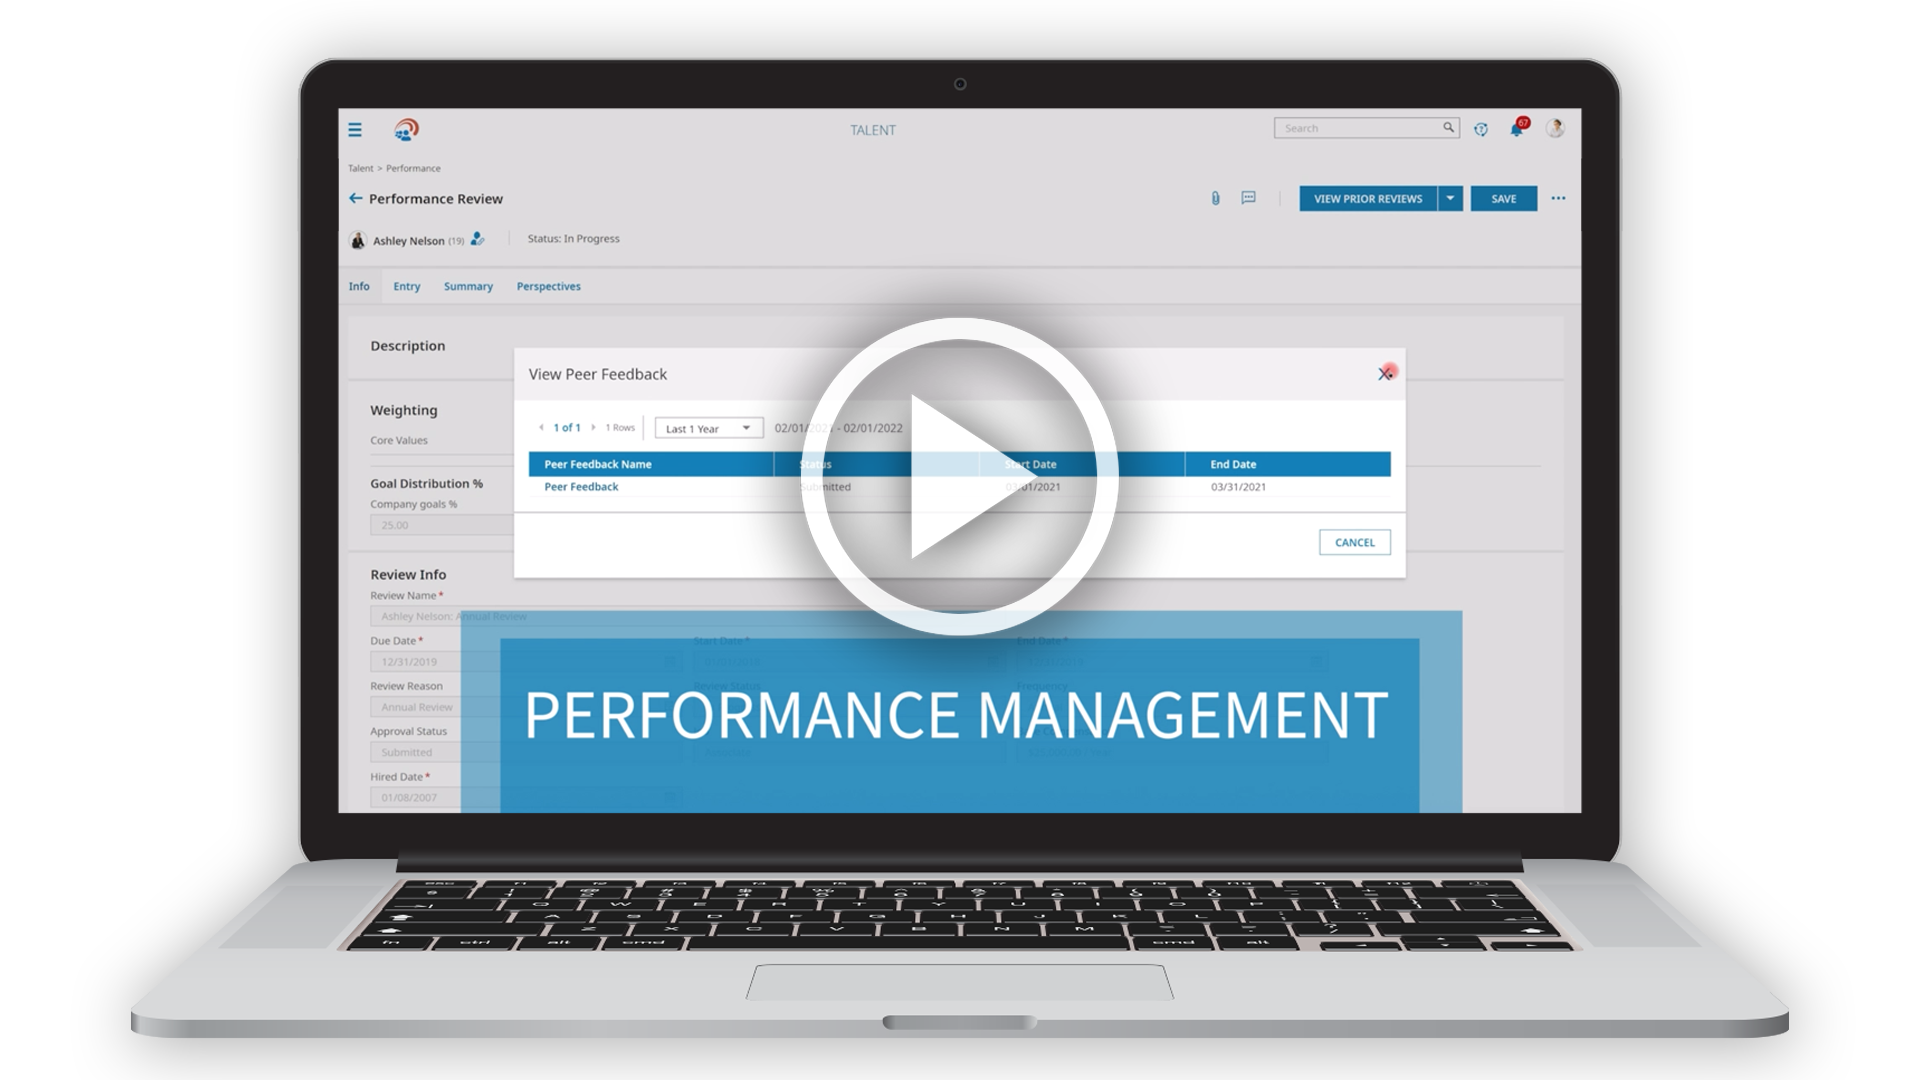 Cannabis Performance Management Software Demo Video Thumbnail